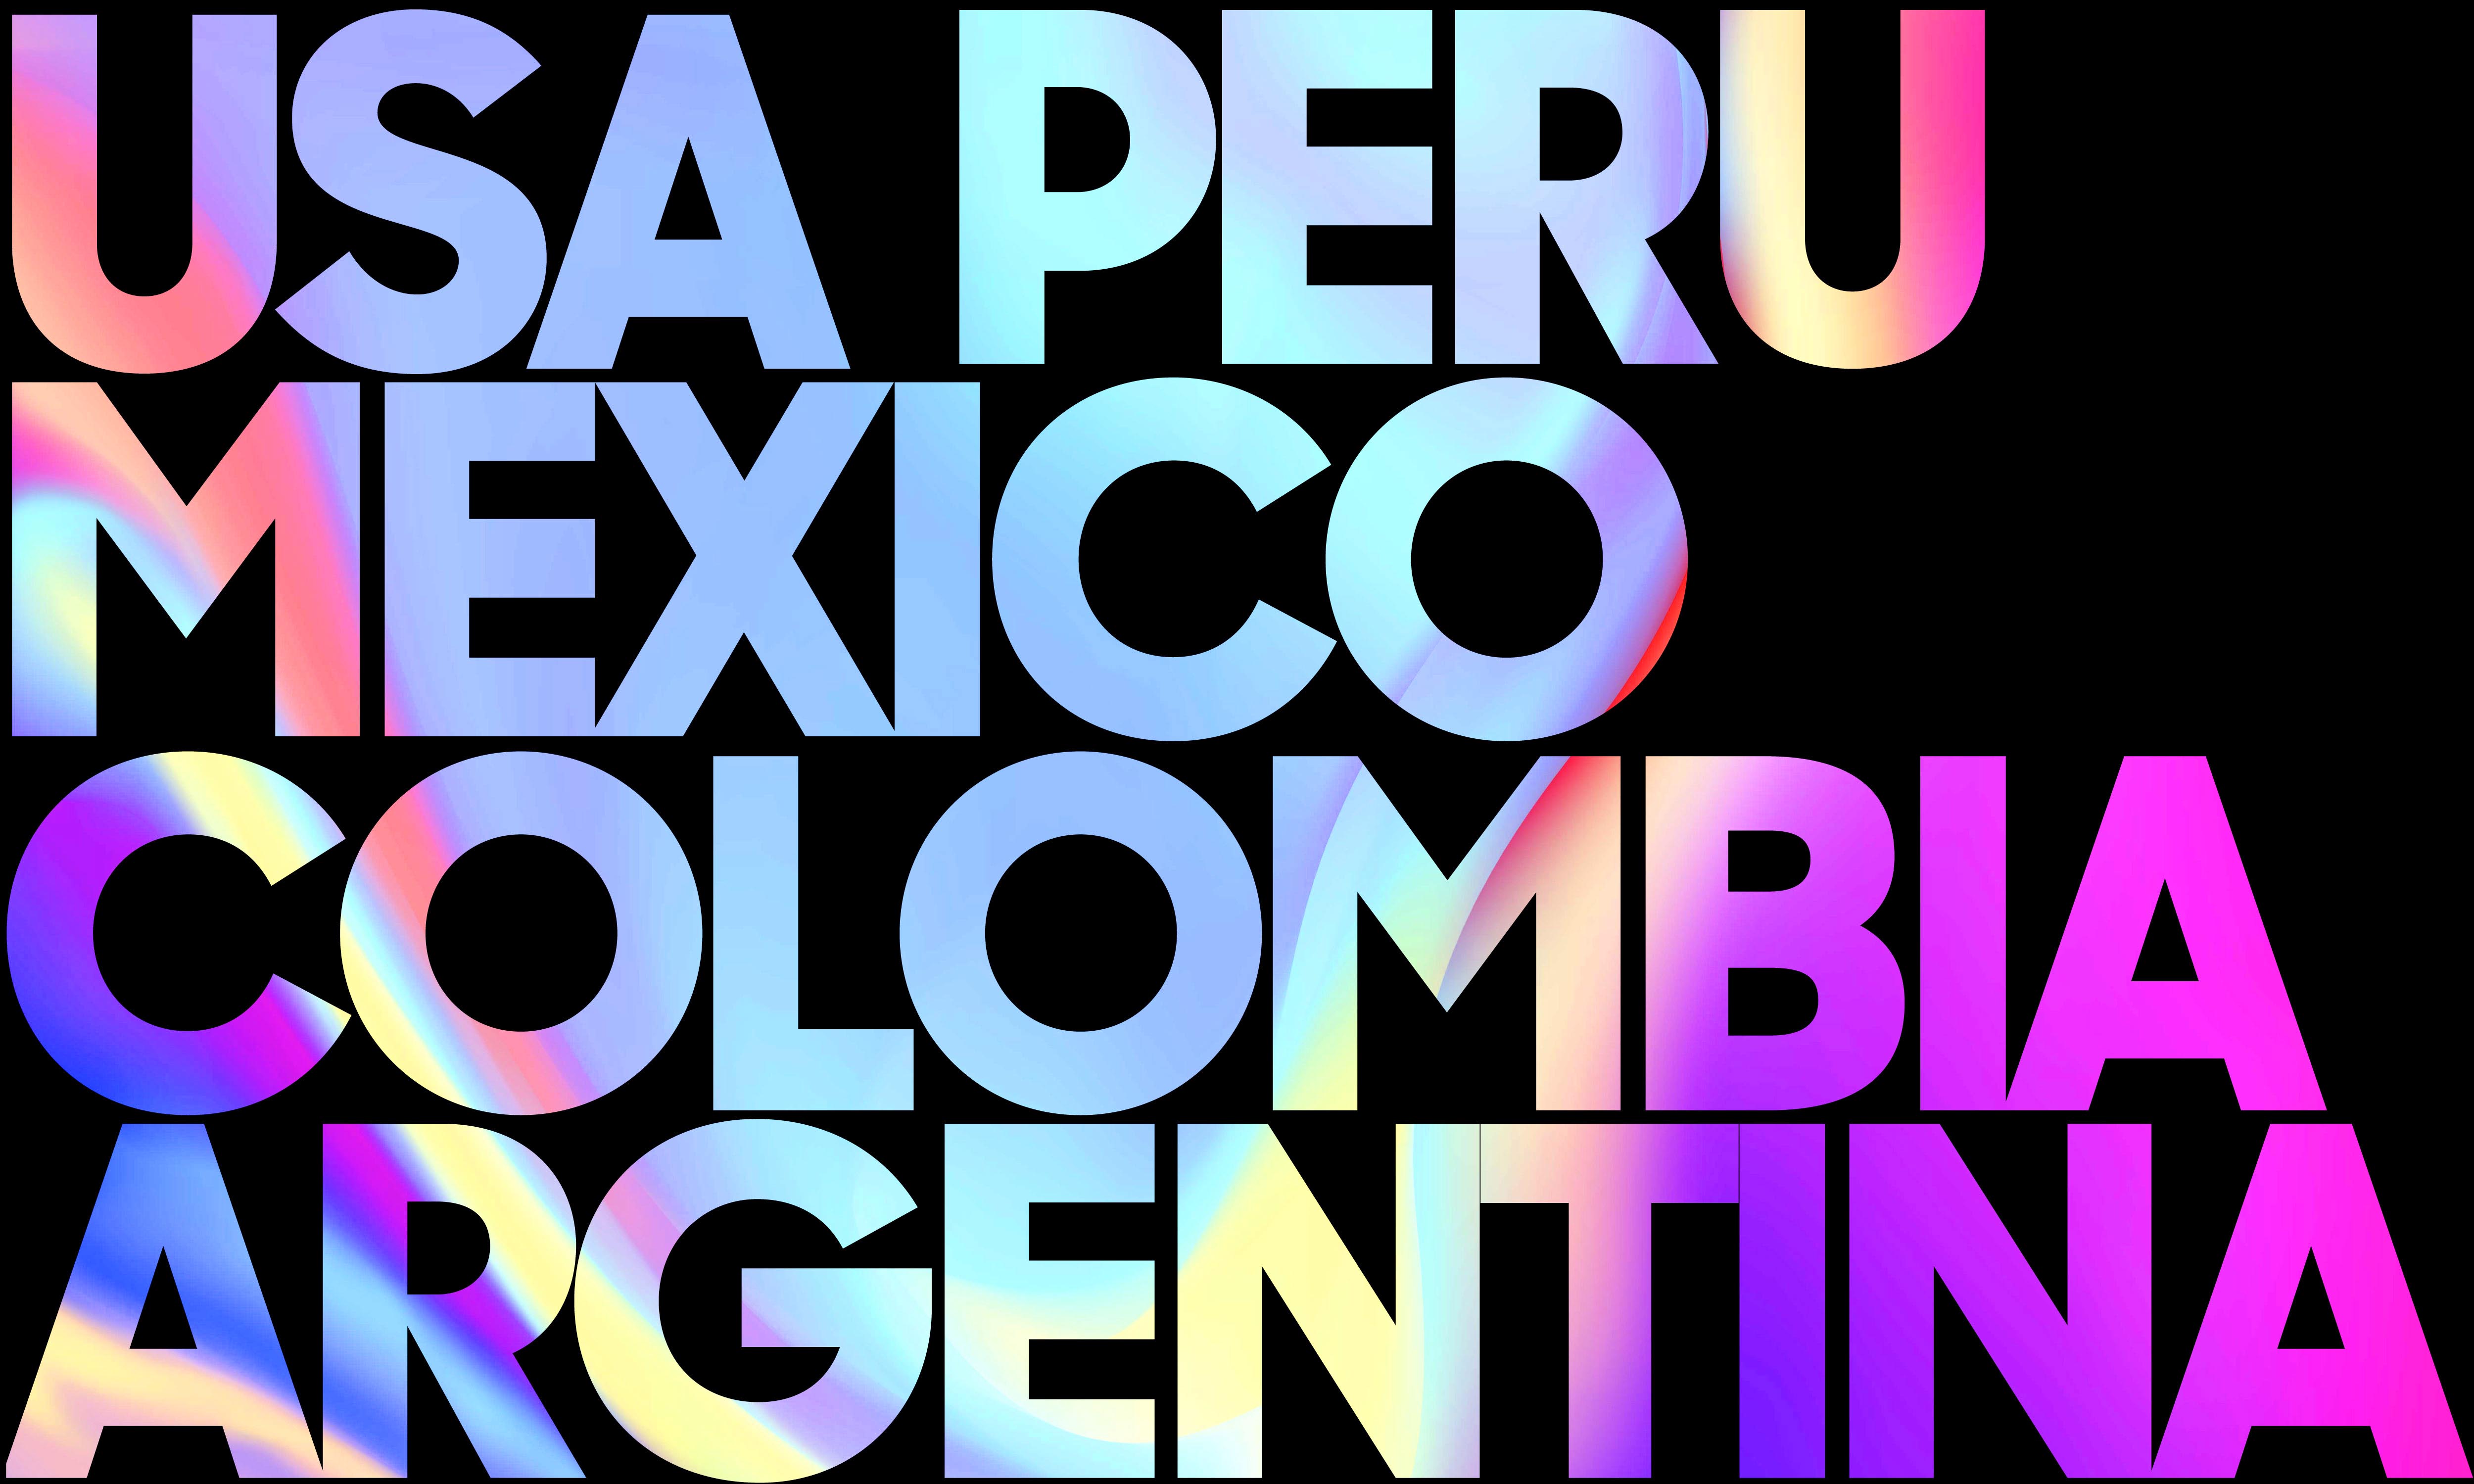 USA PERU MEXICO COLOMBIA ARGENTINA